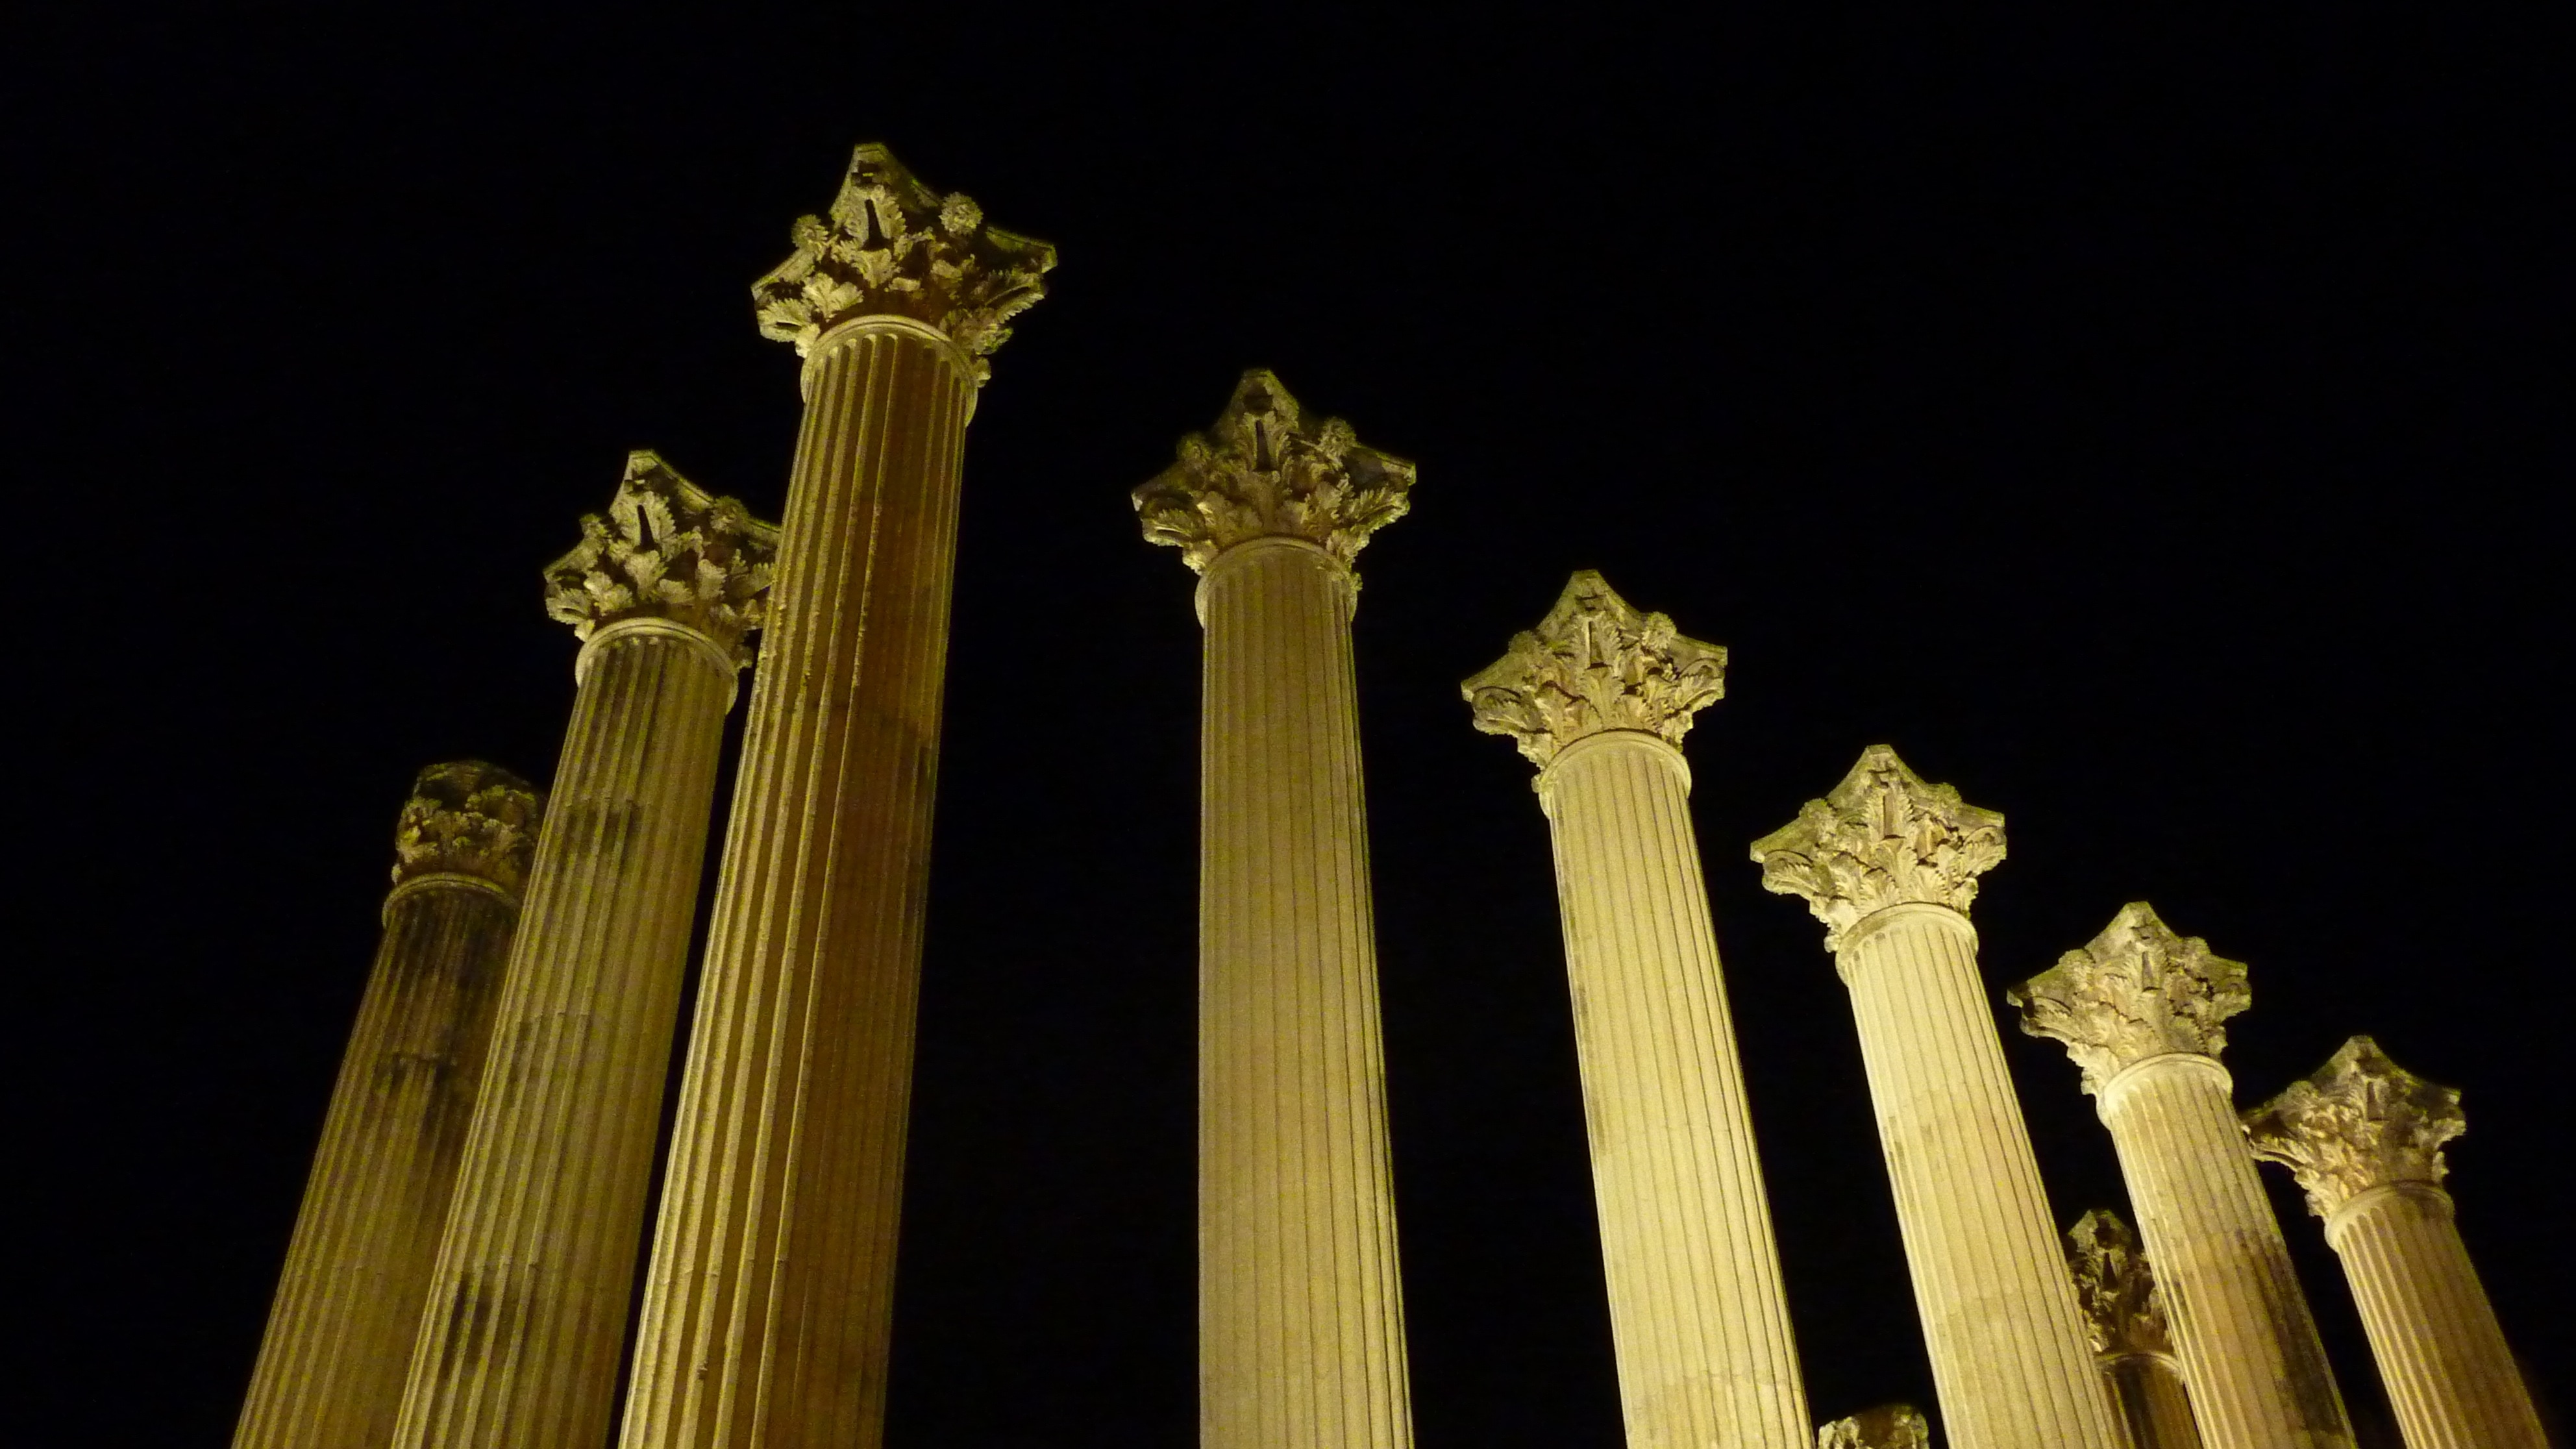 Roman temple. Римский храм Кордова. Рим Испания колонны. Испания архитектура с колоннами. Ночные колонны.